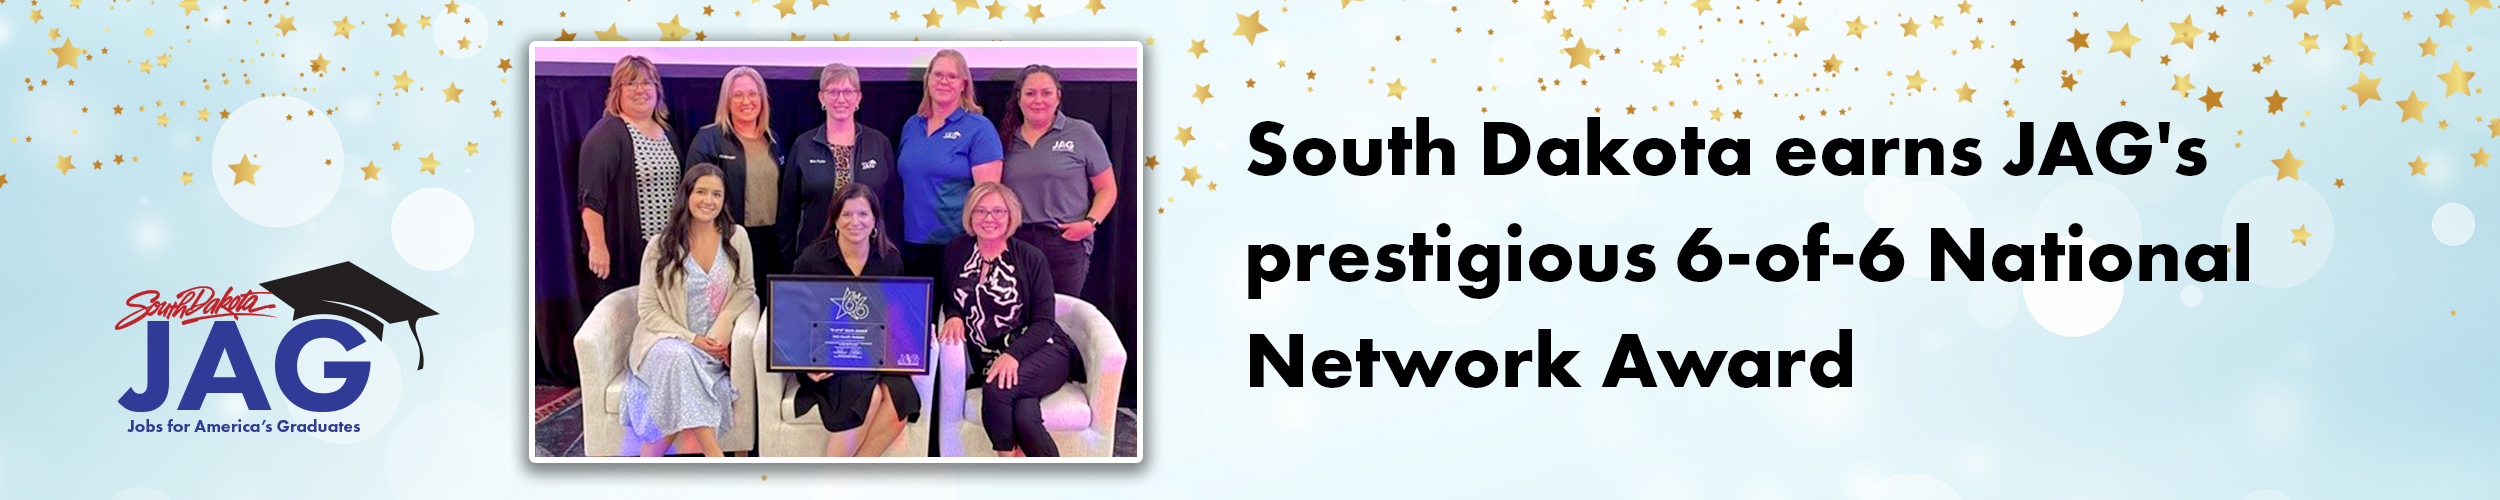 South Dakota earns JAG's prestigious 6-of-6 National Network Award. Link.